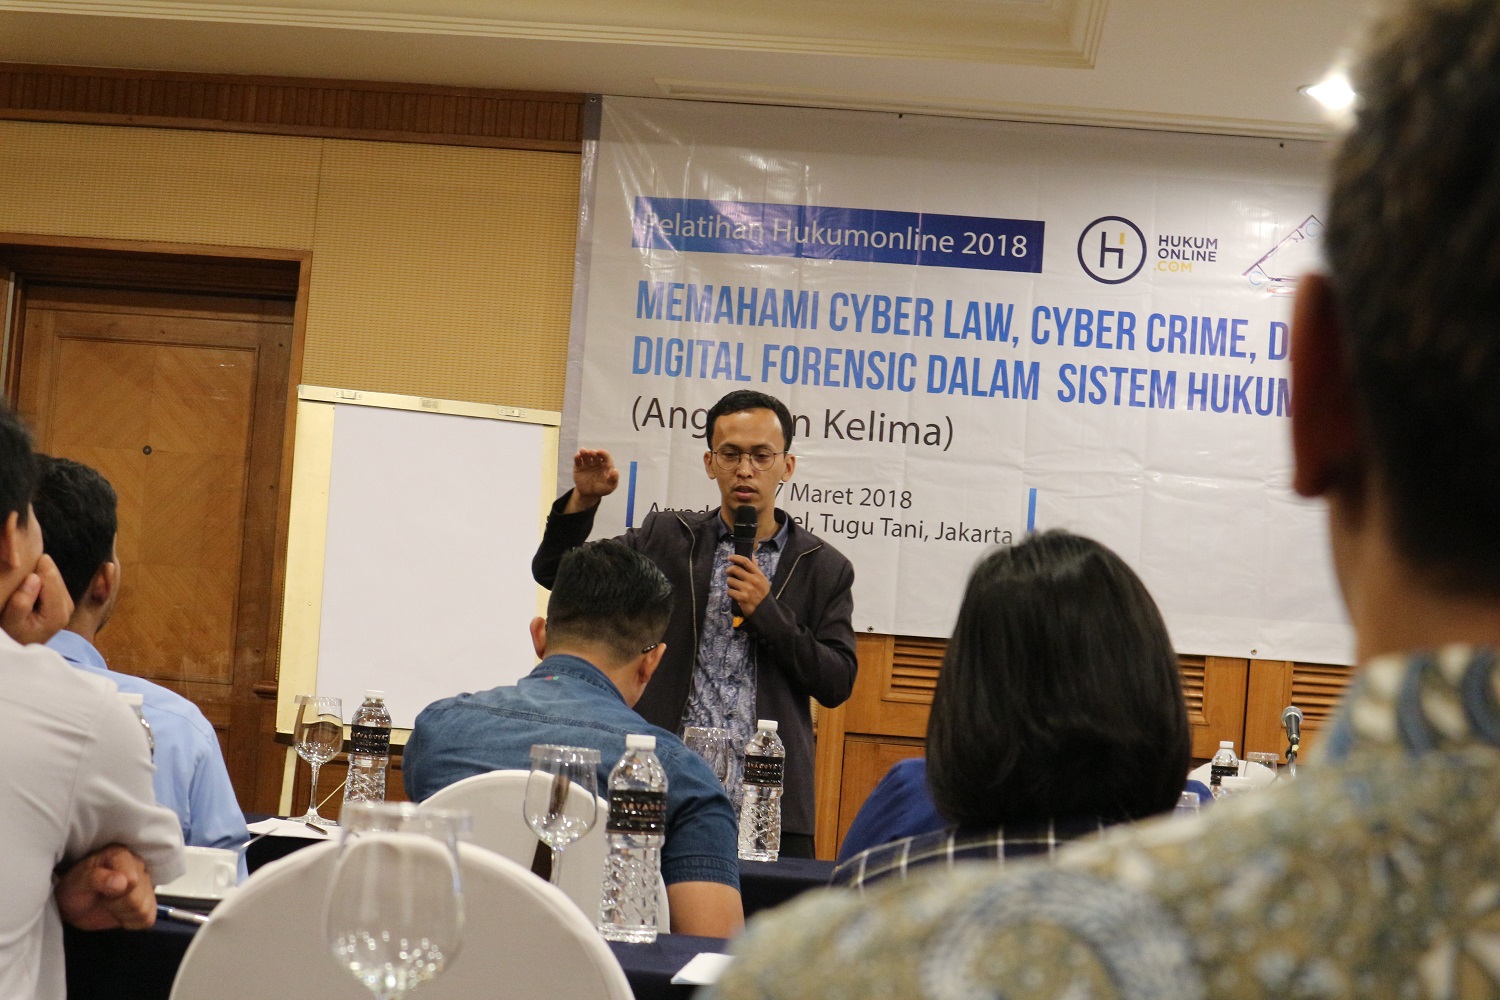 Bapak Teguh Arifiyadi, selakuÂ Ketua Umum Indonesia Cyber Law Community (ICLC), dalam Pelatihan Hukumonline 2018 